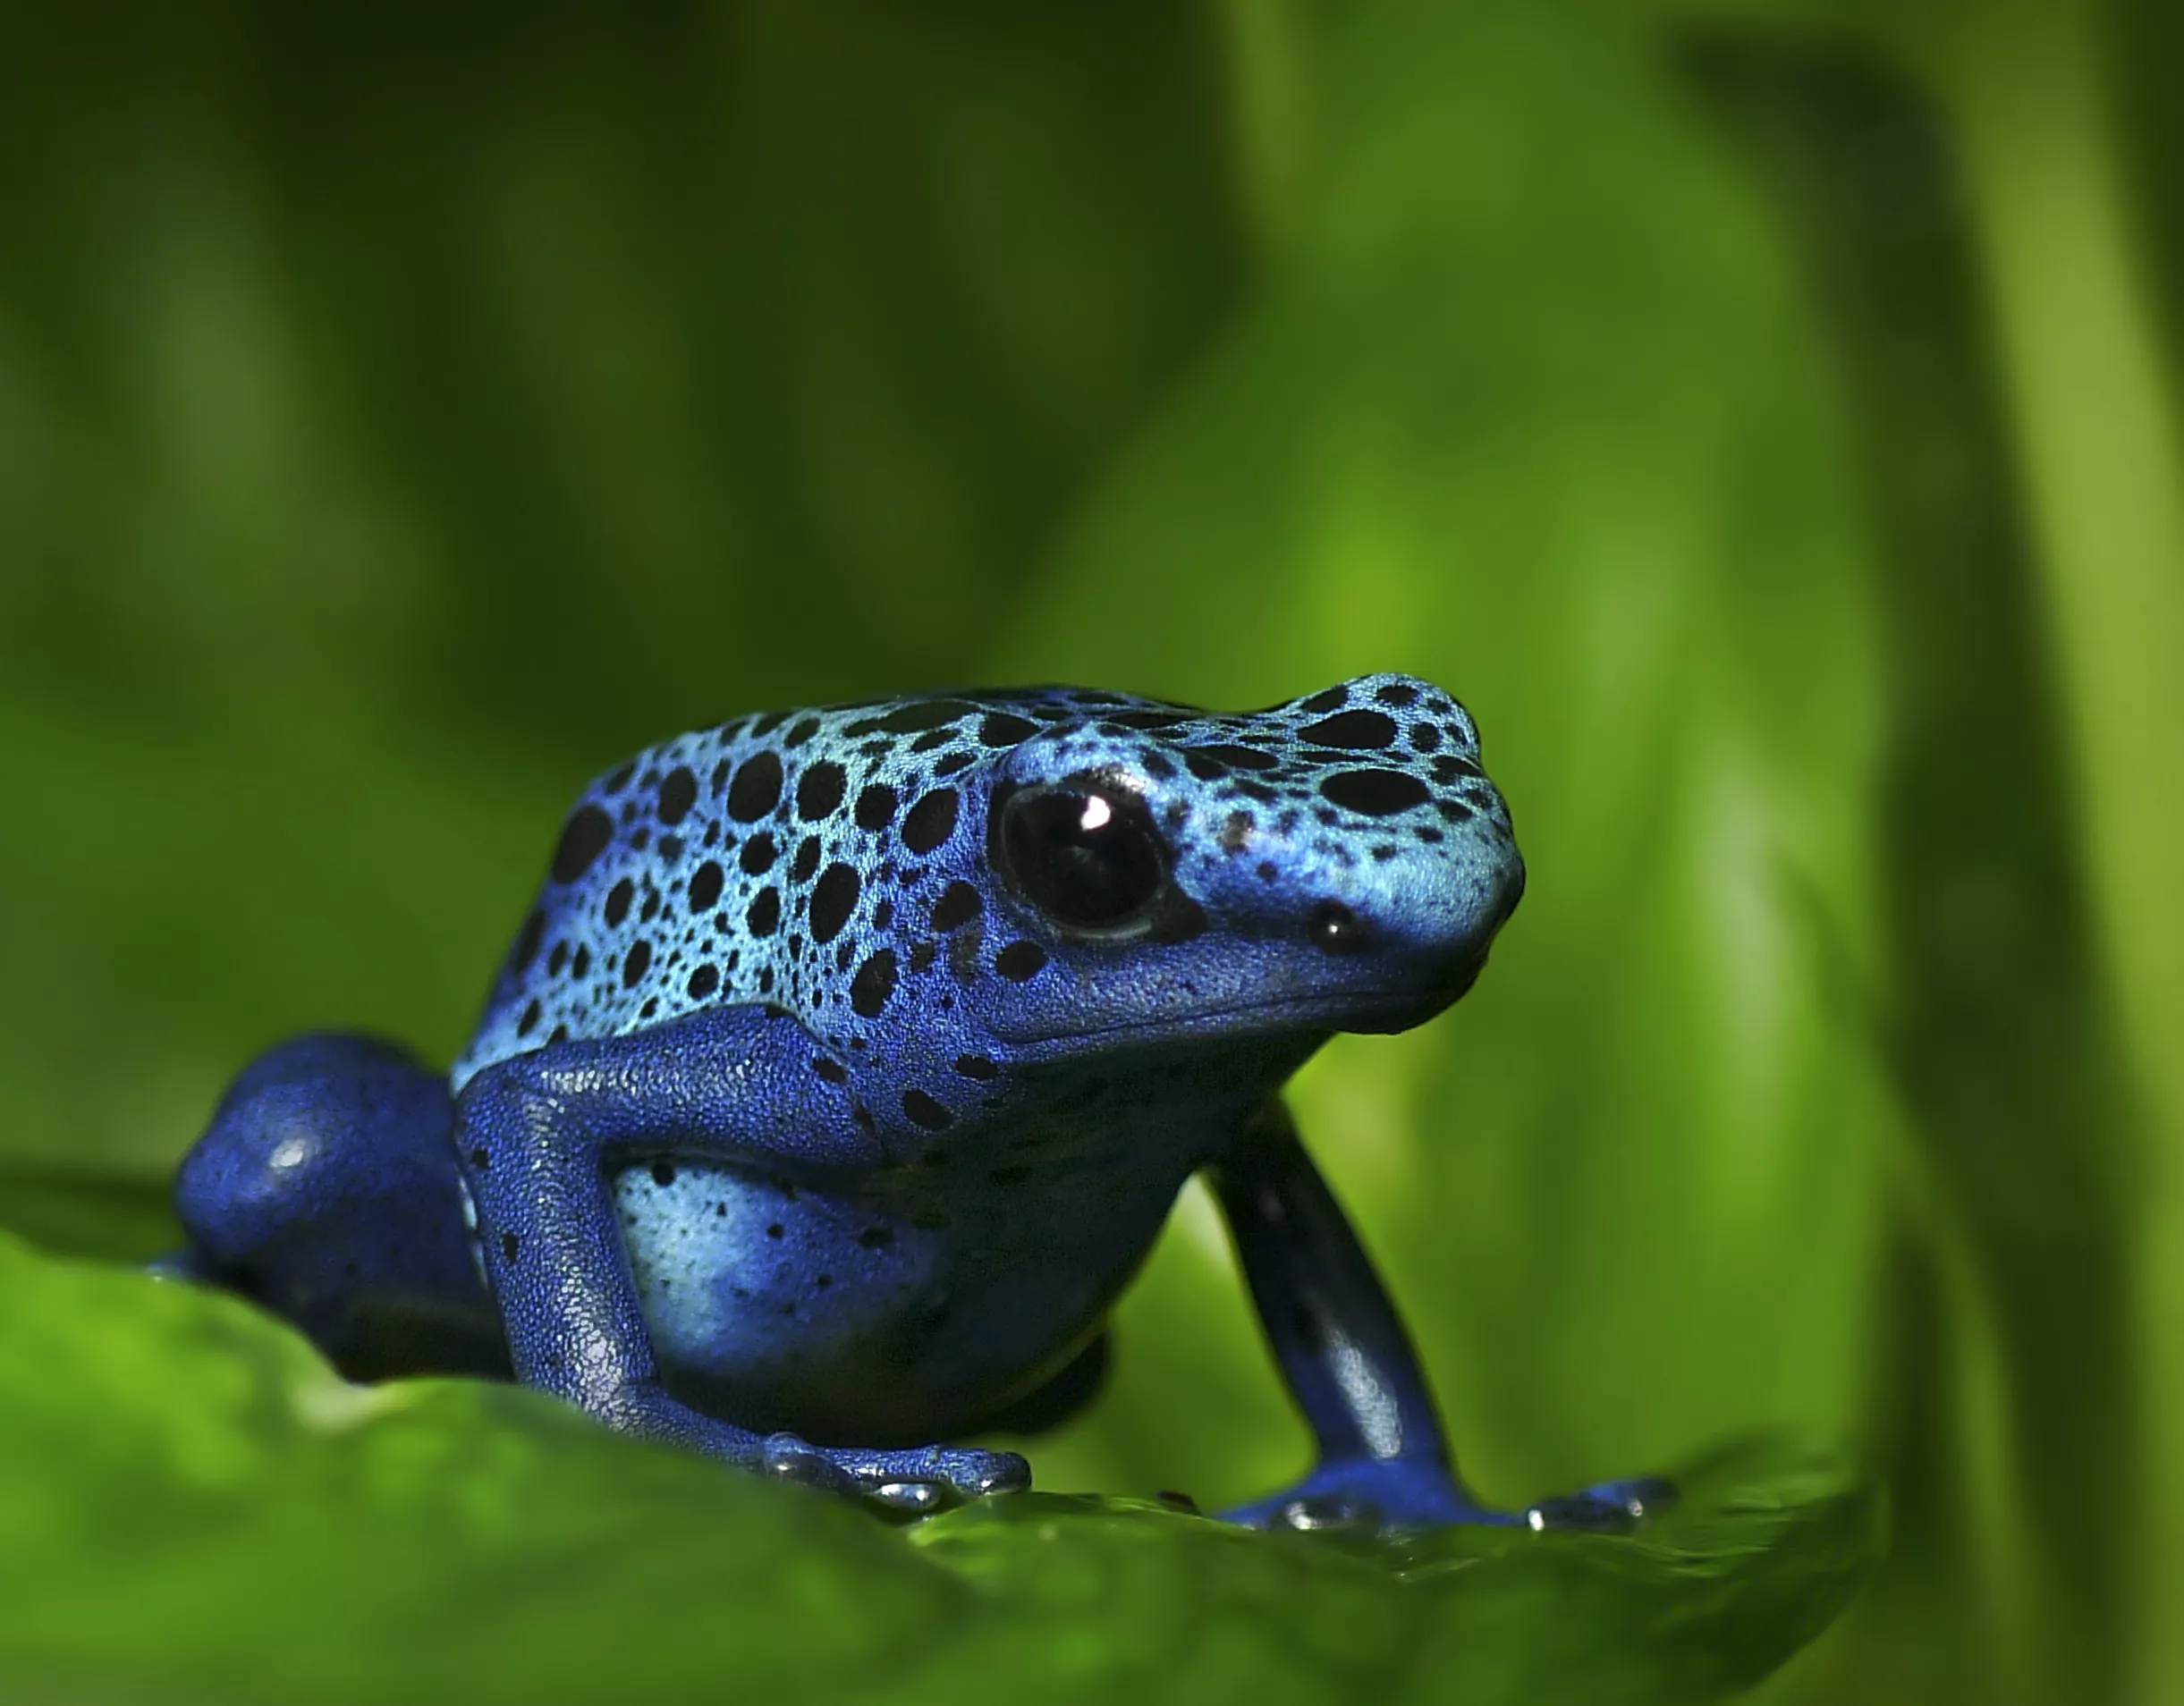 A blue poison dart frog resting on a green leaf